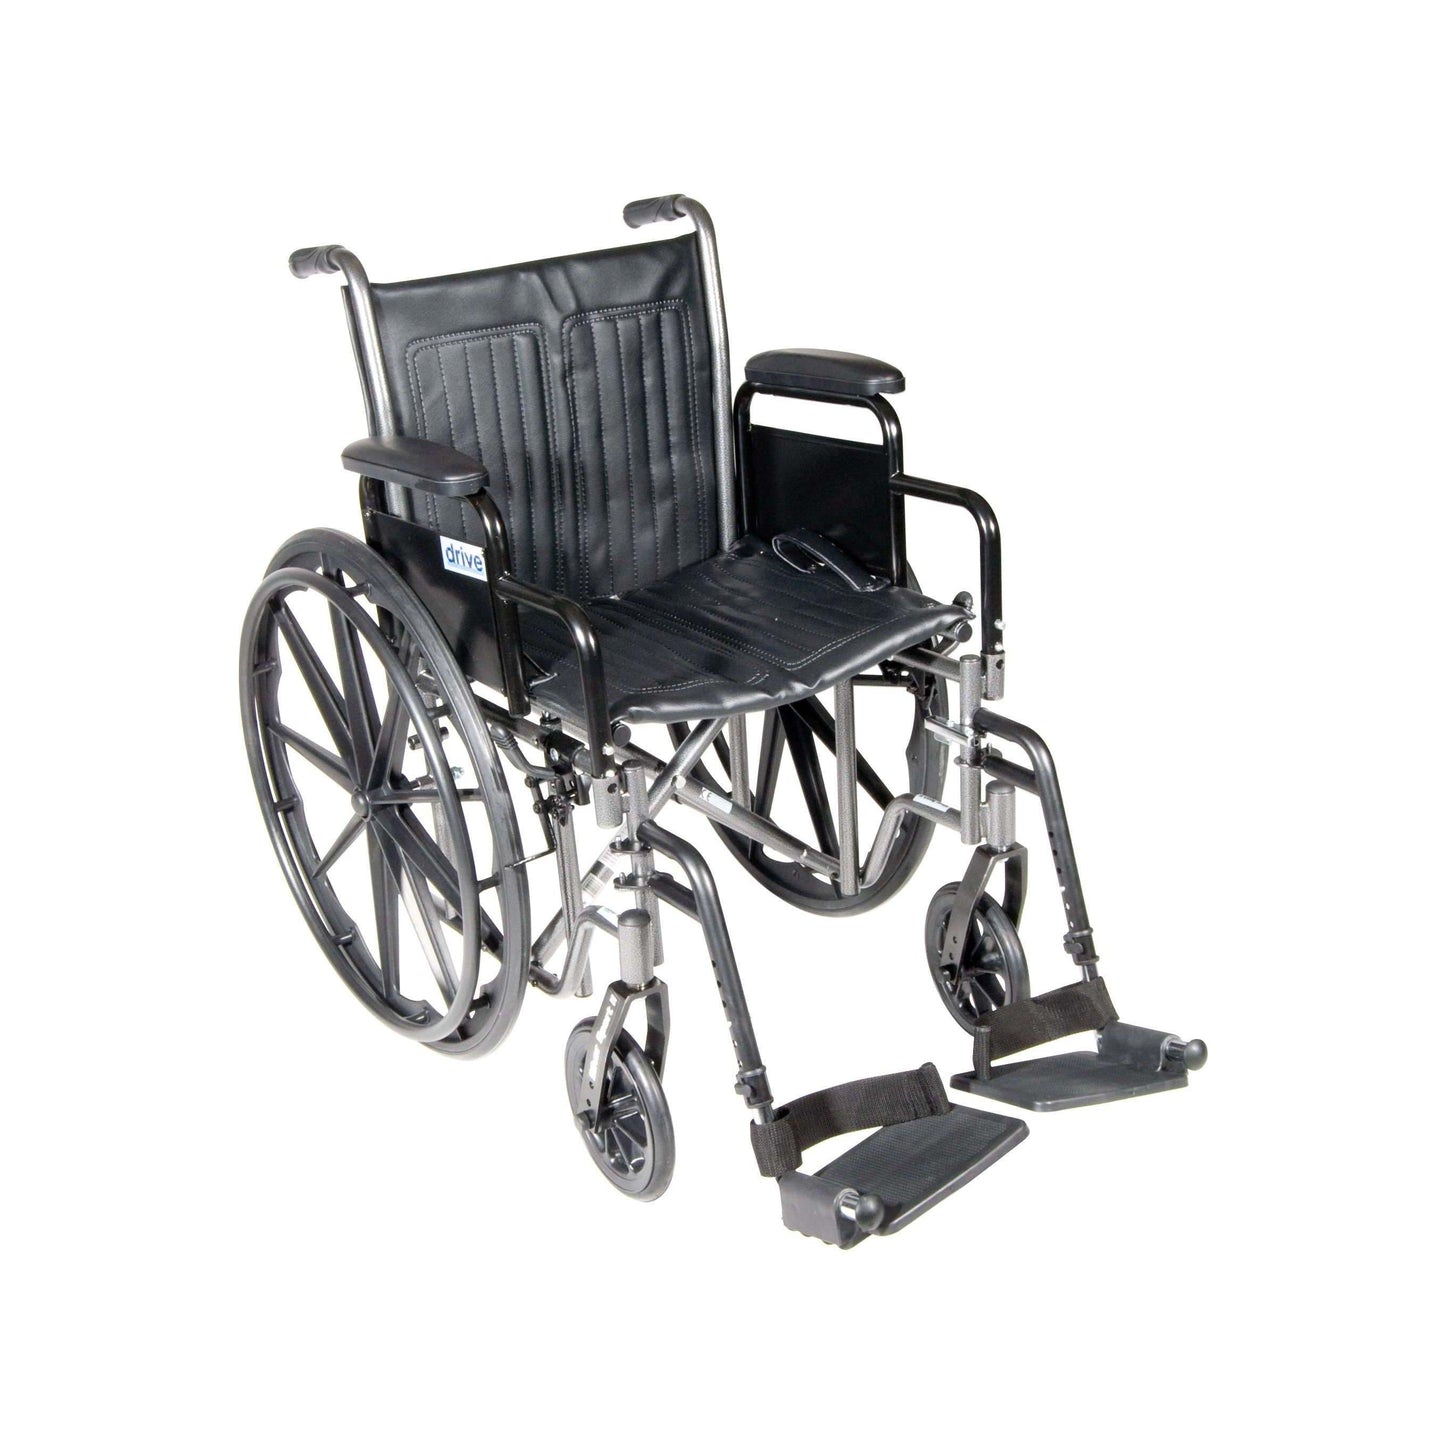 Drive ssp216dda-sf Silver Sport 2 Wheelchair, Detachable Desk Arms, Swing away Footrests, 16" Seat